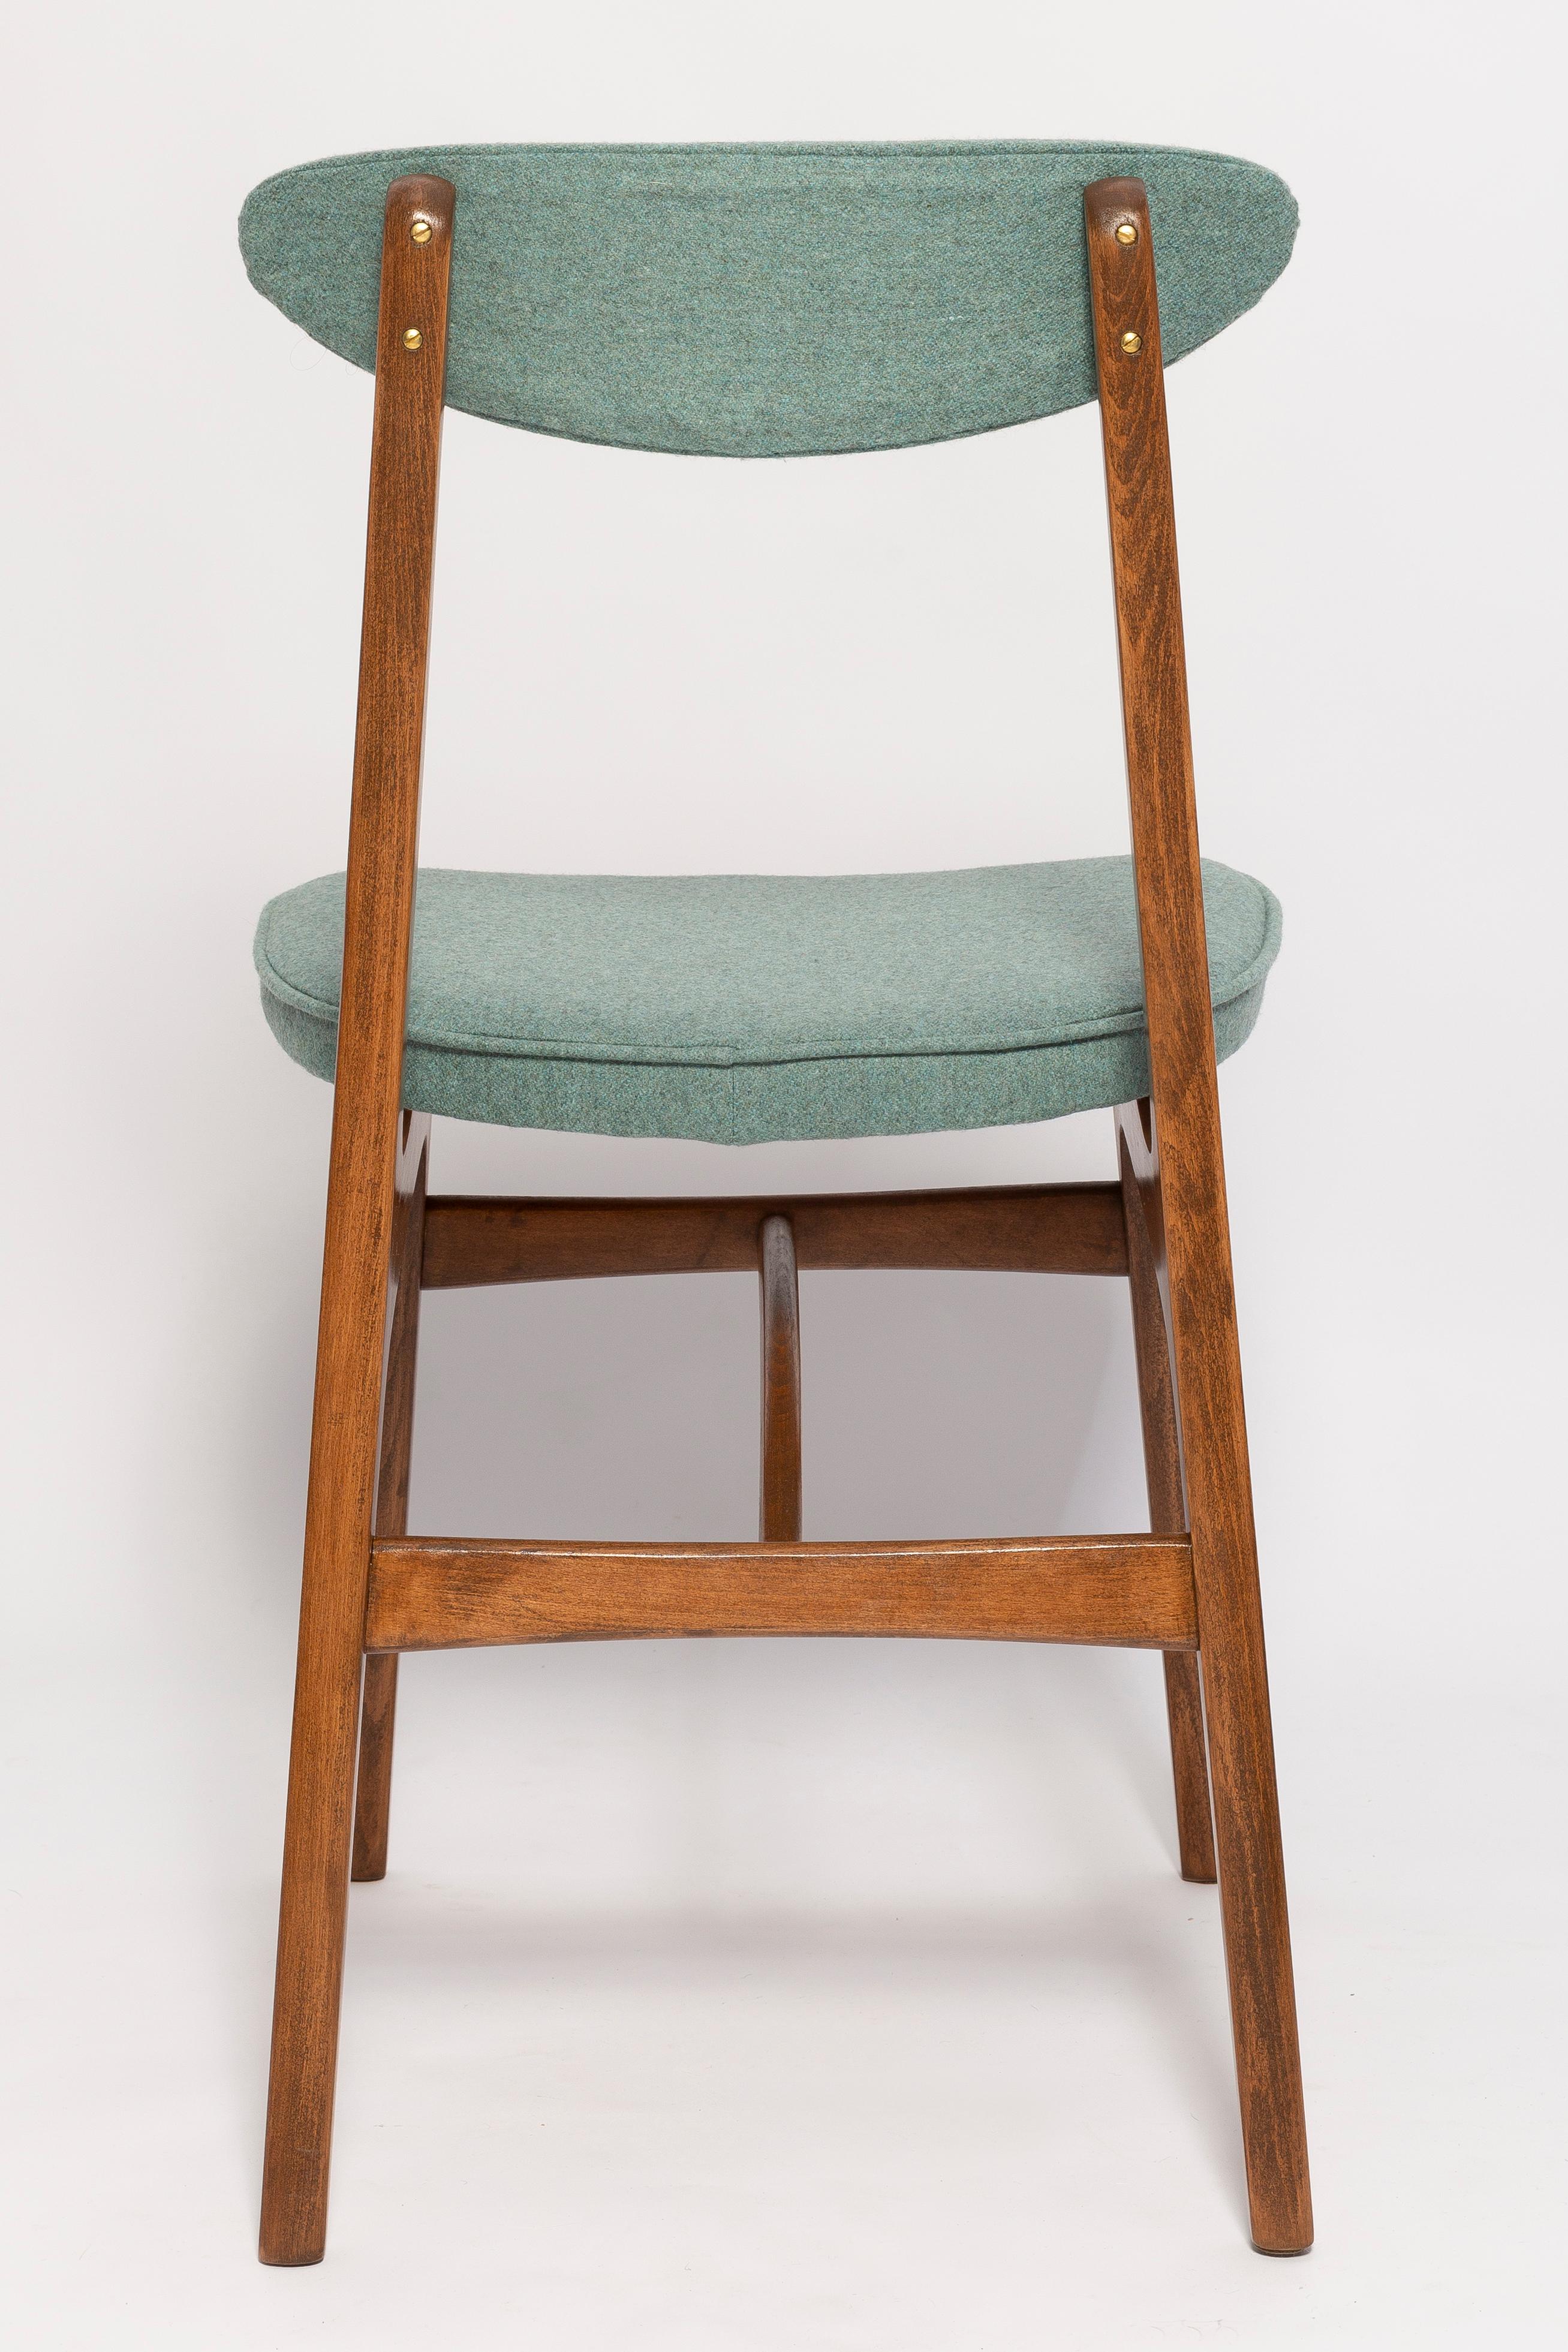 Mid Century Green Velvet Chair, Walnut Wood, Rajmund Halas, Poland, 1960s For Sale 4